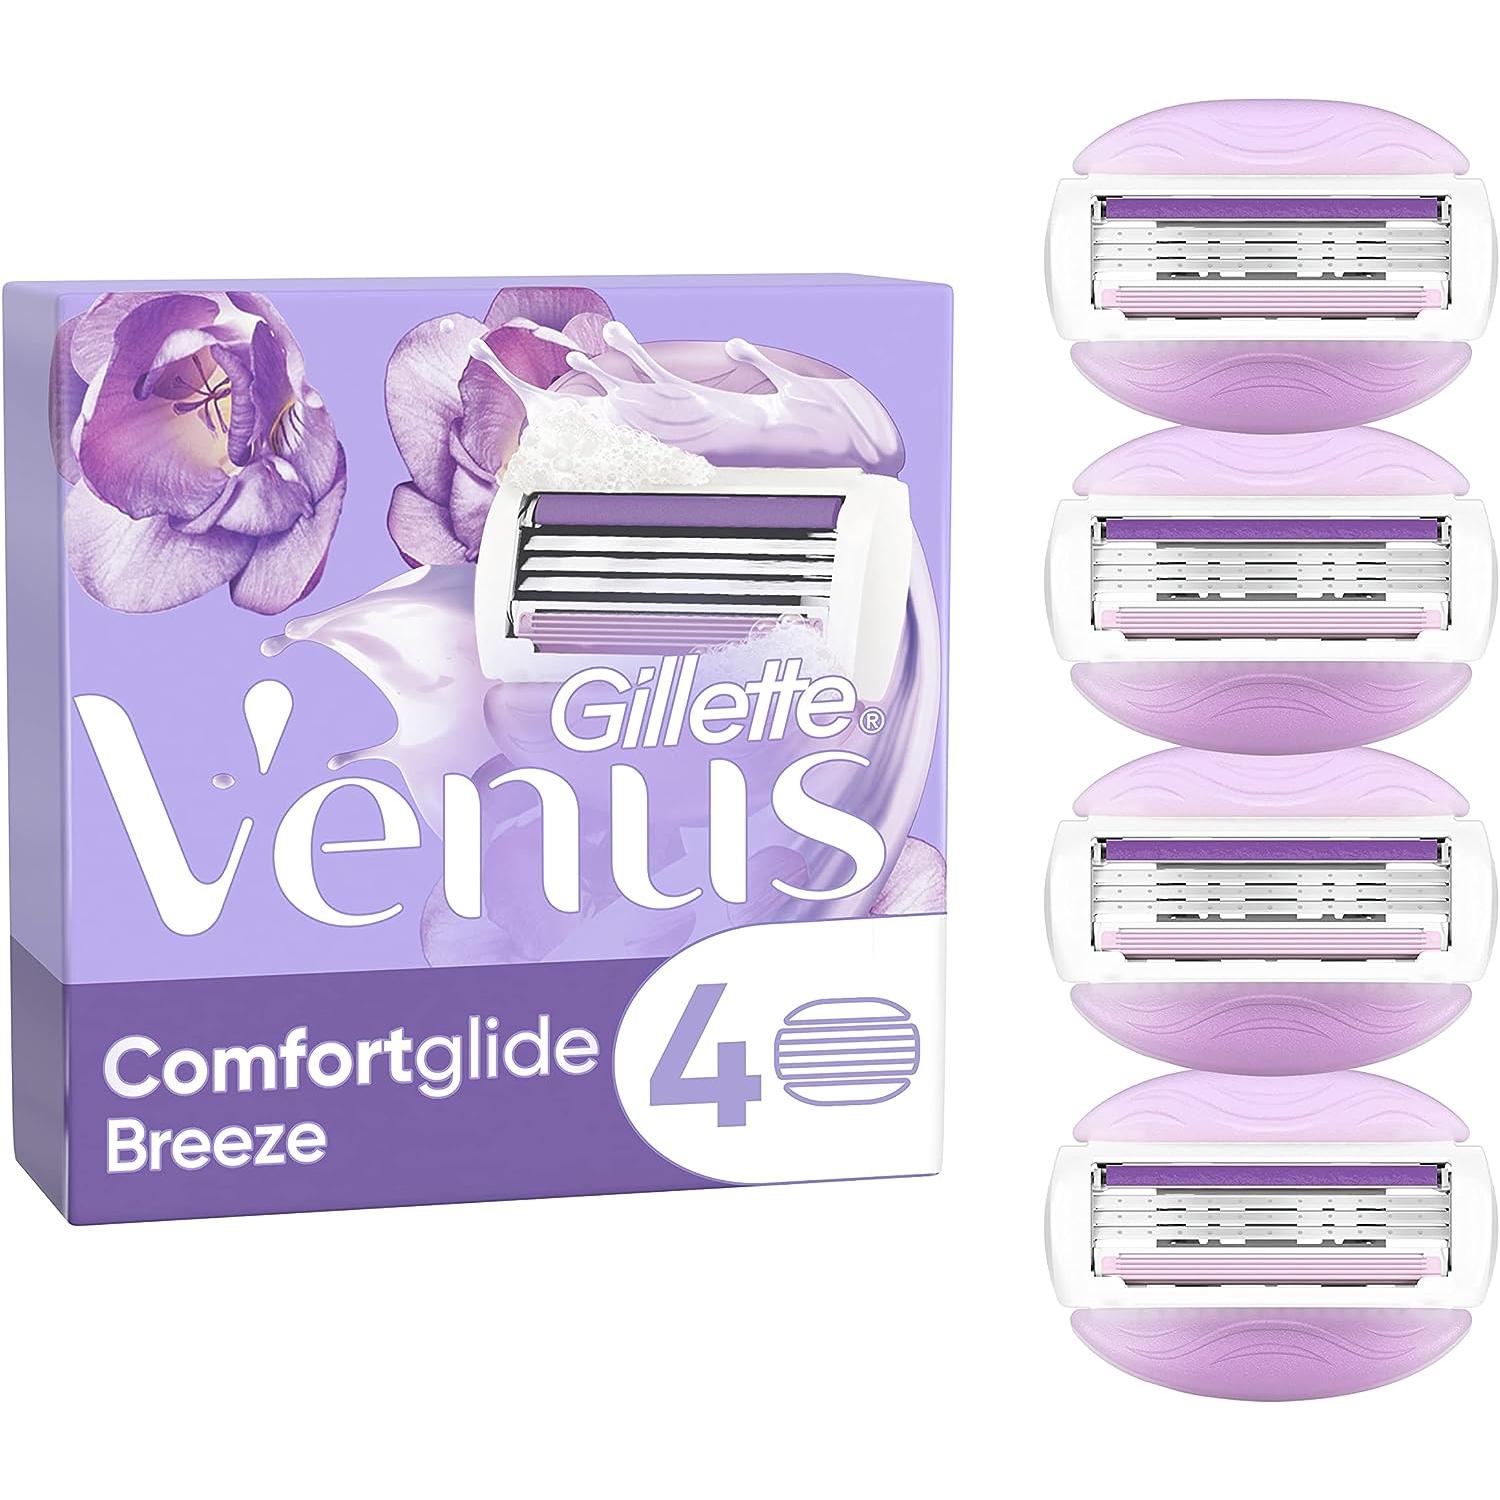 Gillette - Gillette Venus ComfortGlide Breeze cuchillas de afeitar mujer, paquete de 4 cuchillas de recambio